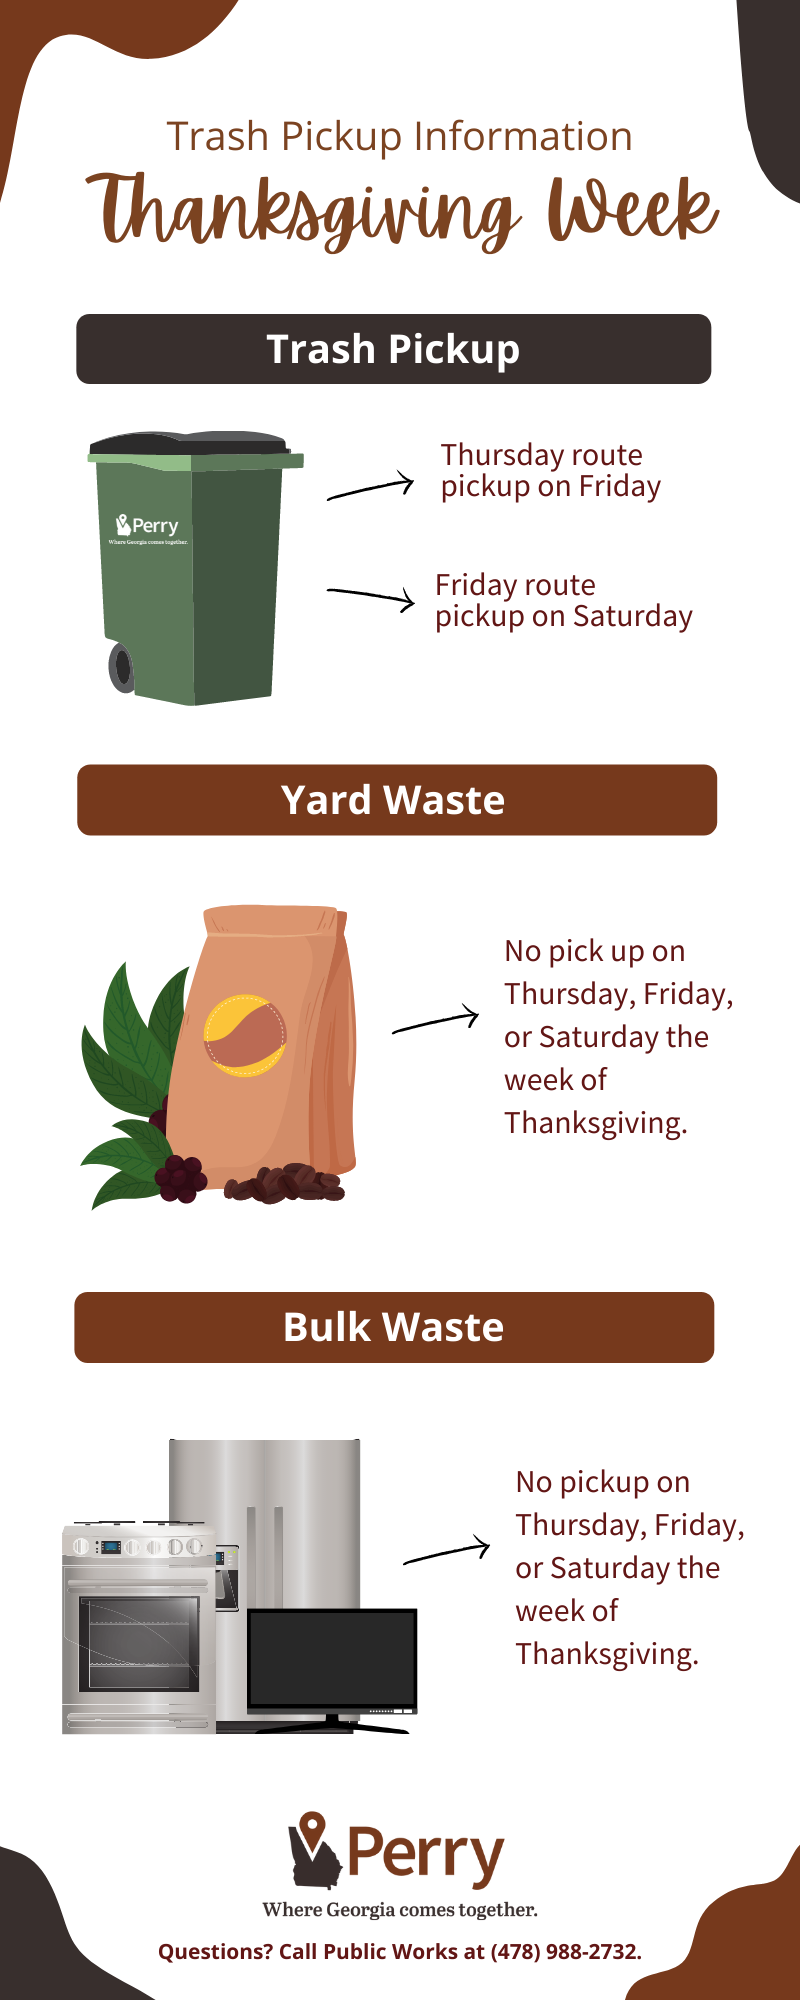 Photo for Thanksgiving Week Trash Pickup Information